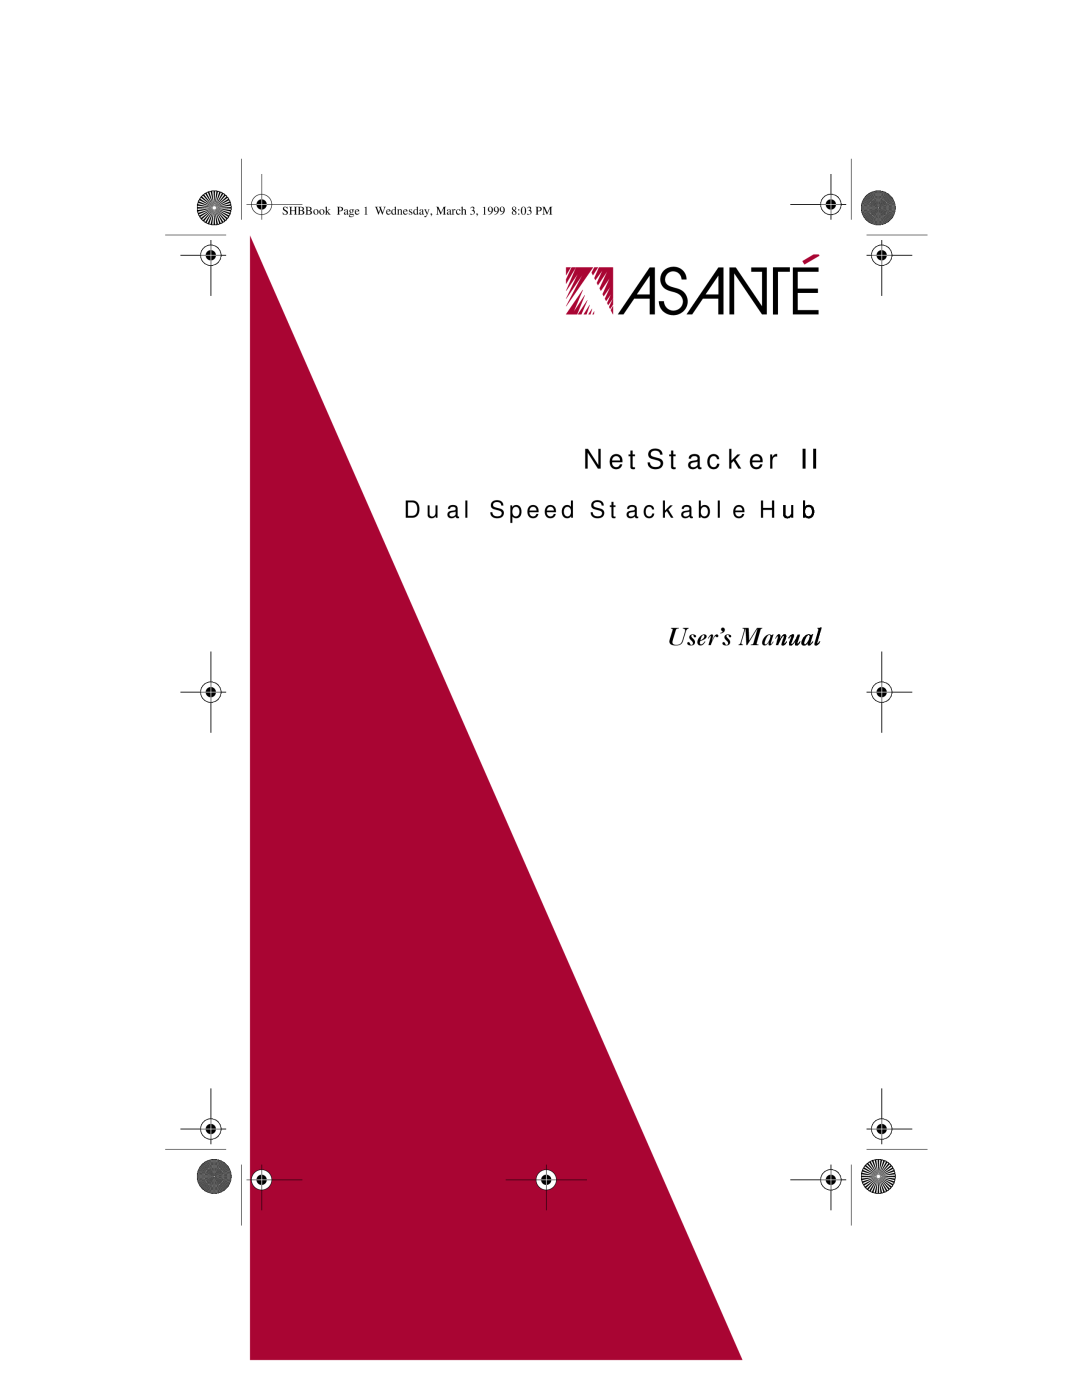 Asante Technologies II user manual User’s Manual, Netstacker, Dual Speed Stackable Hub 